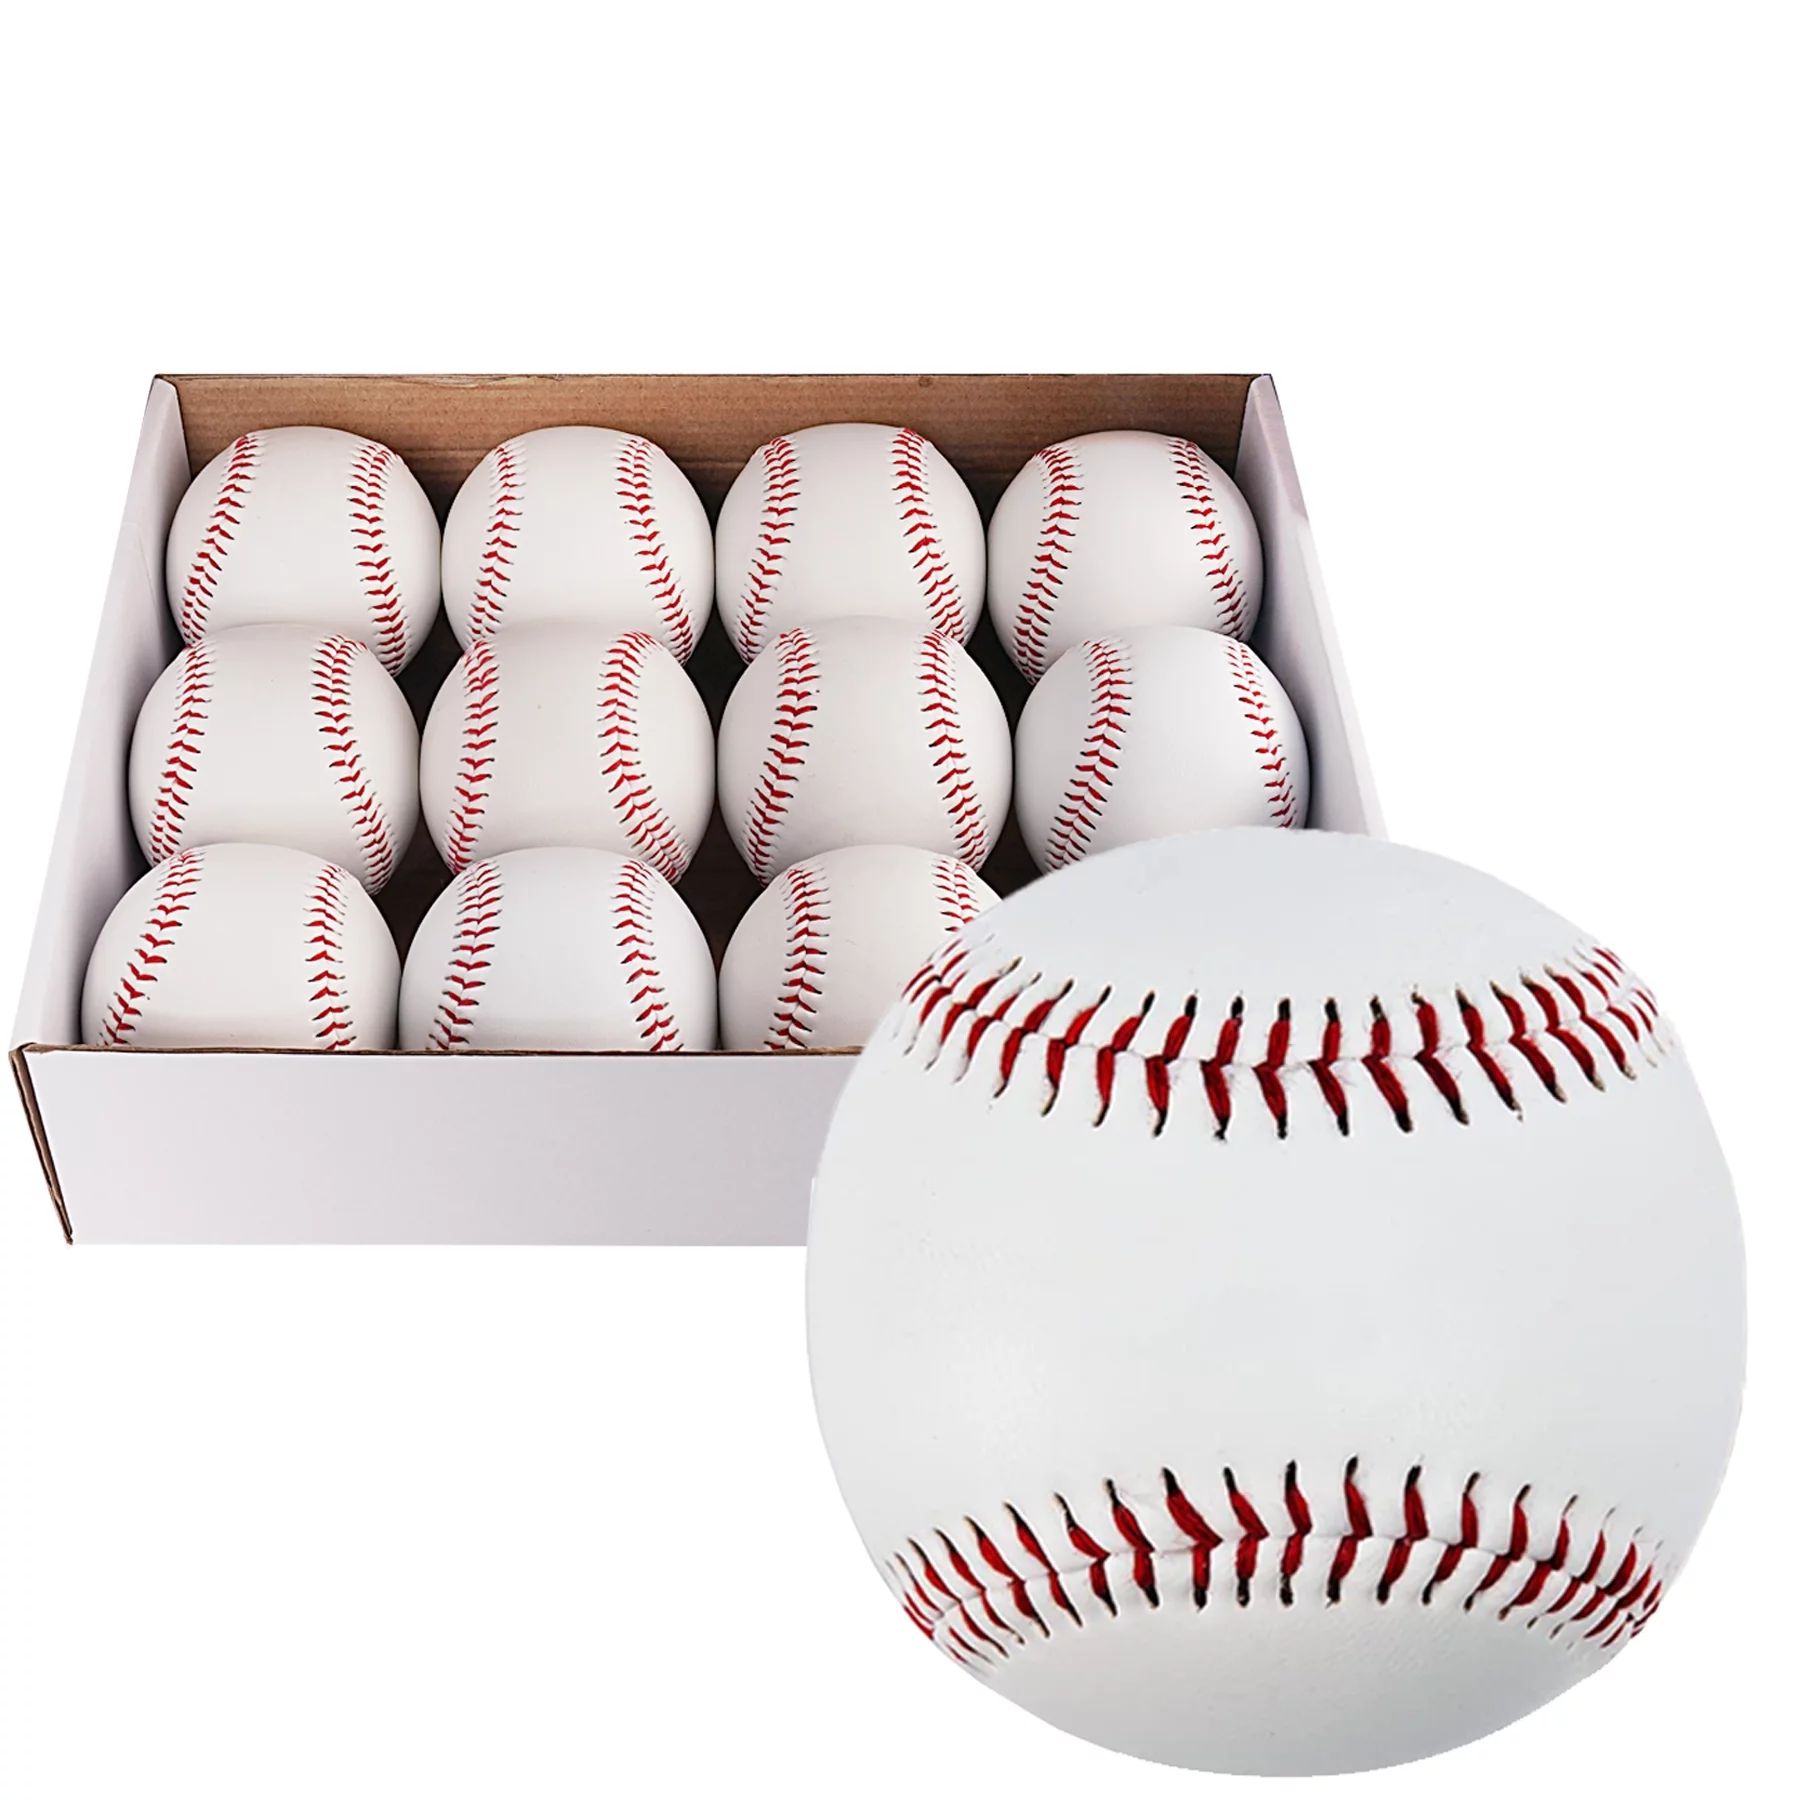 GKK 12 Pack Standard Size Adult Baseballs Unmarked & Leather Covered Training Ball Practice Baseb... | Walmart (US)